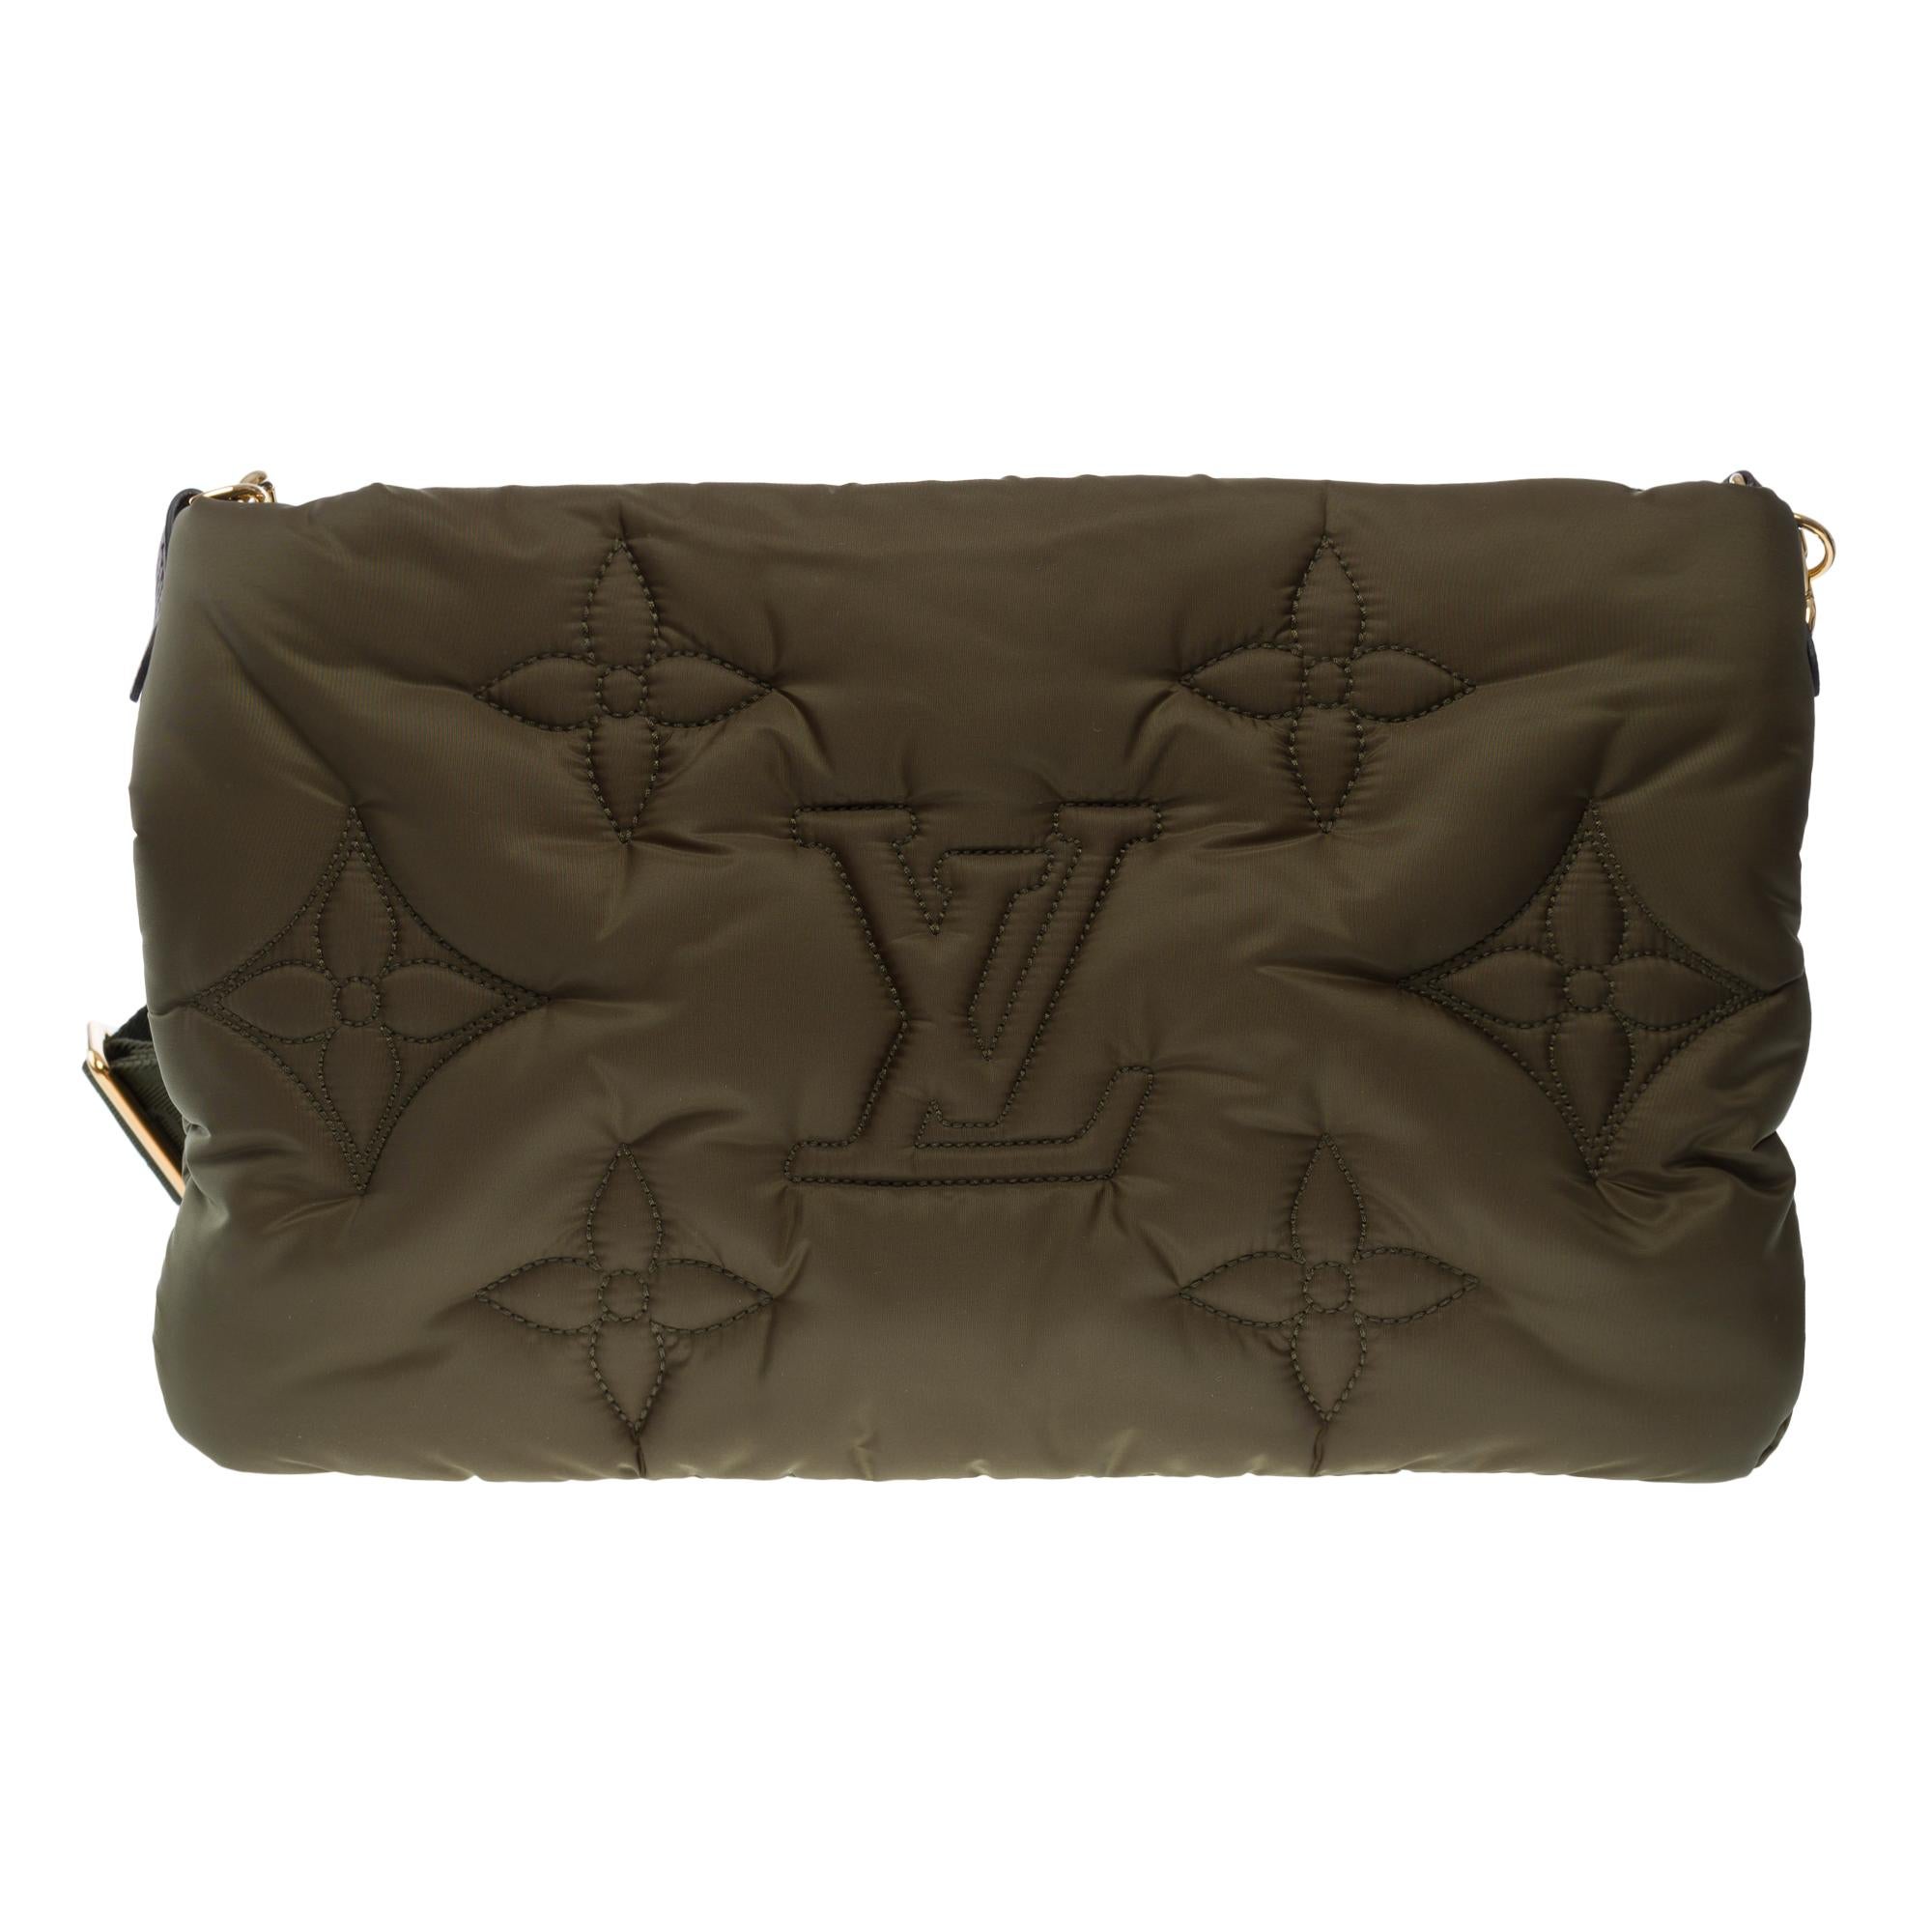 Women's or Men's New Louis Vuitton Pillow Maxi Pochette shoulder bag in khaki/Beige nylon, GHW For Sale